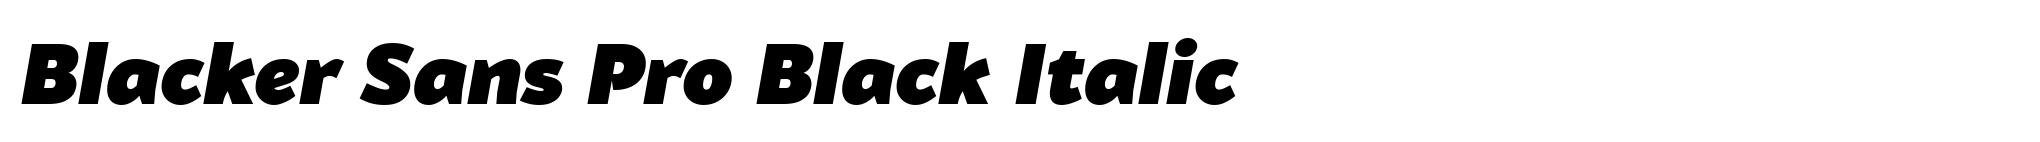 Blacker Sans Pro Black Italic image